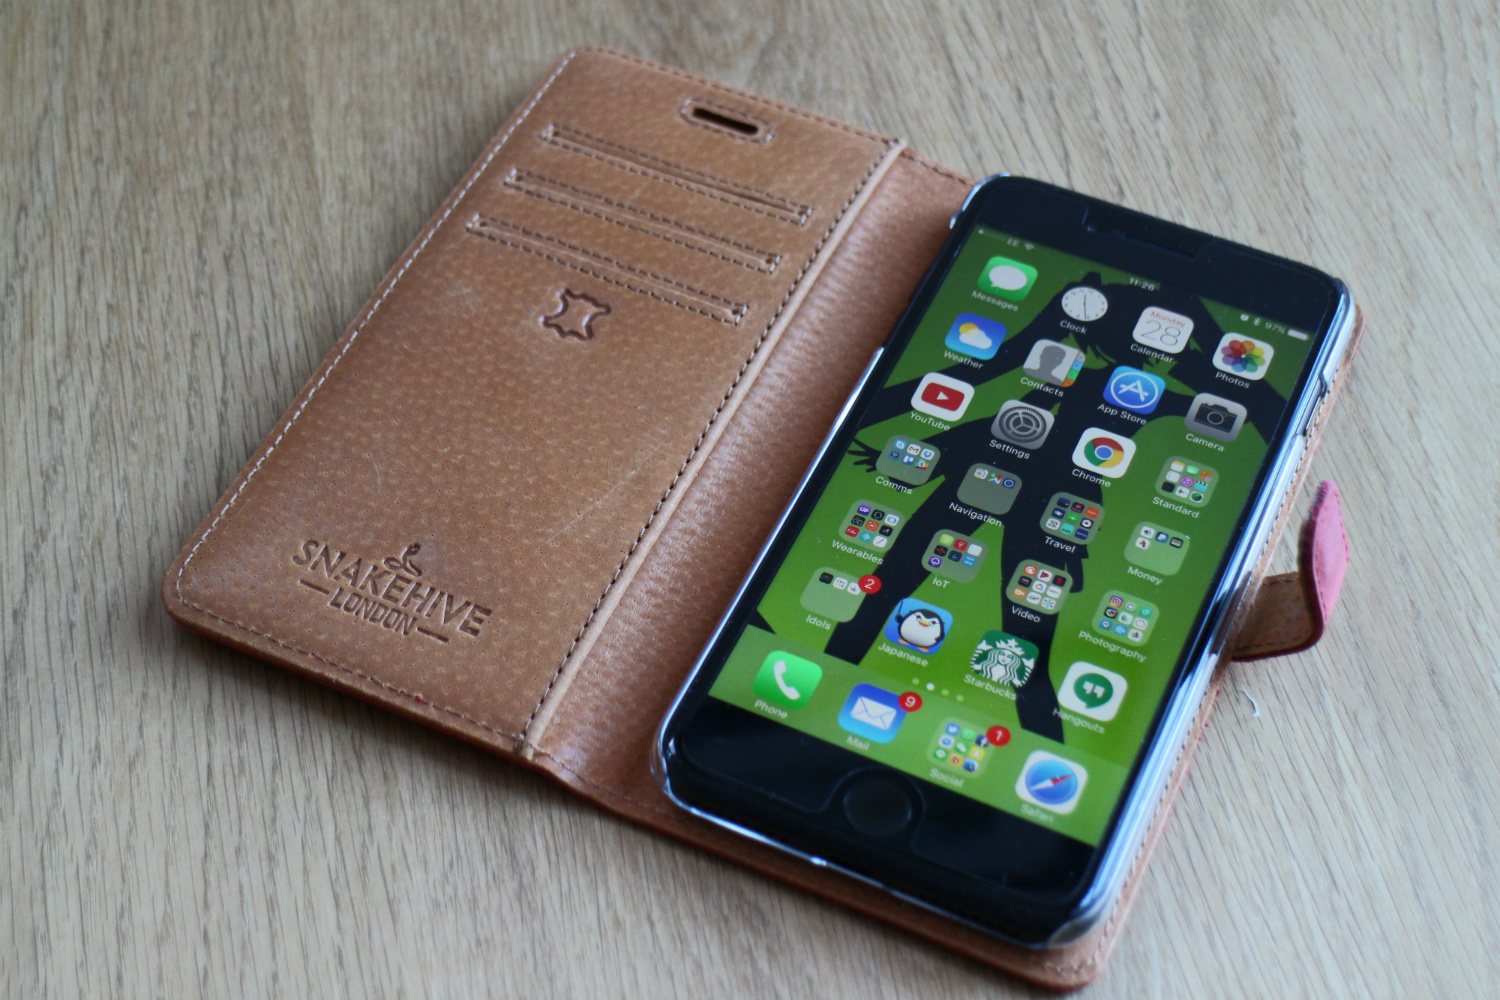 Monogrammed iPhone 7/7 Plus Wallet Case, Tech Cases